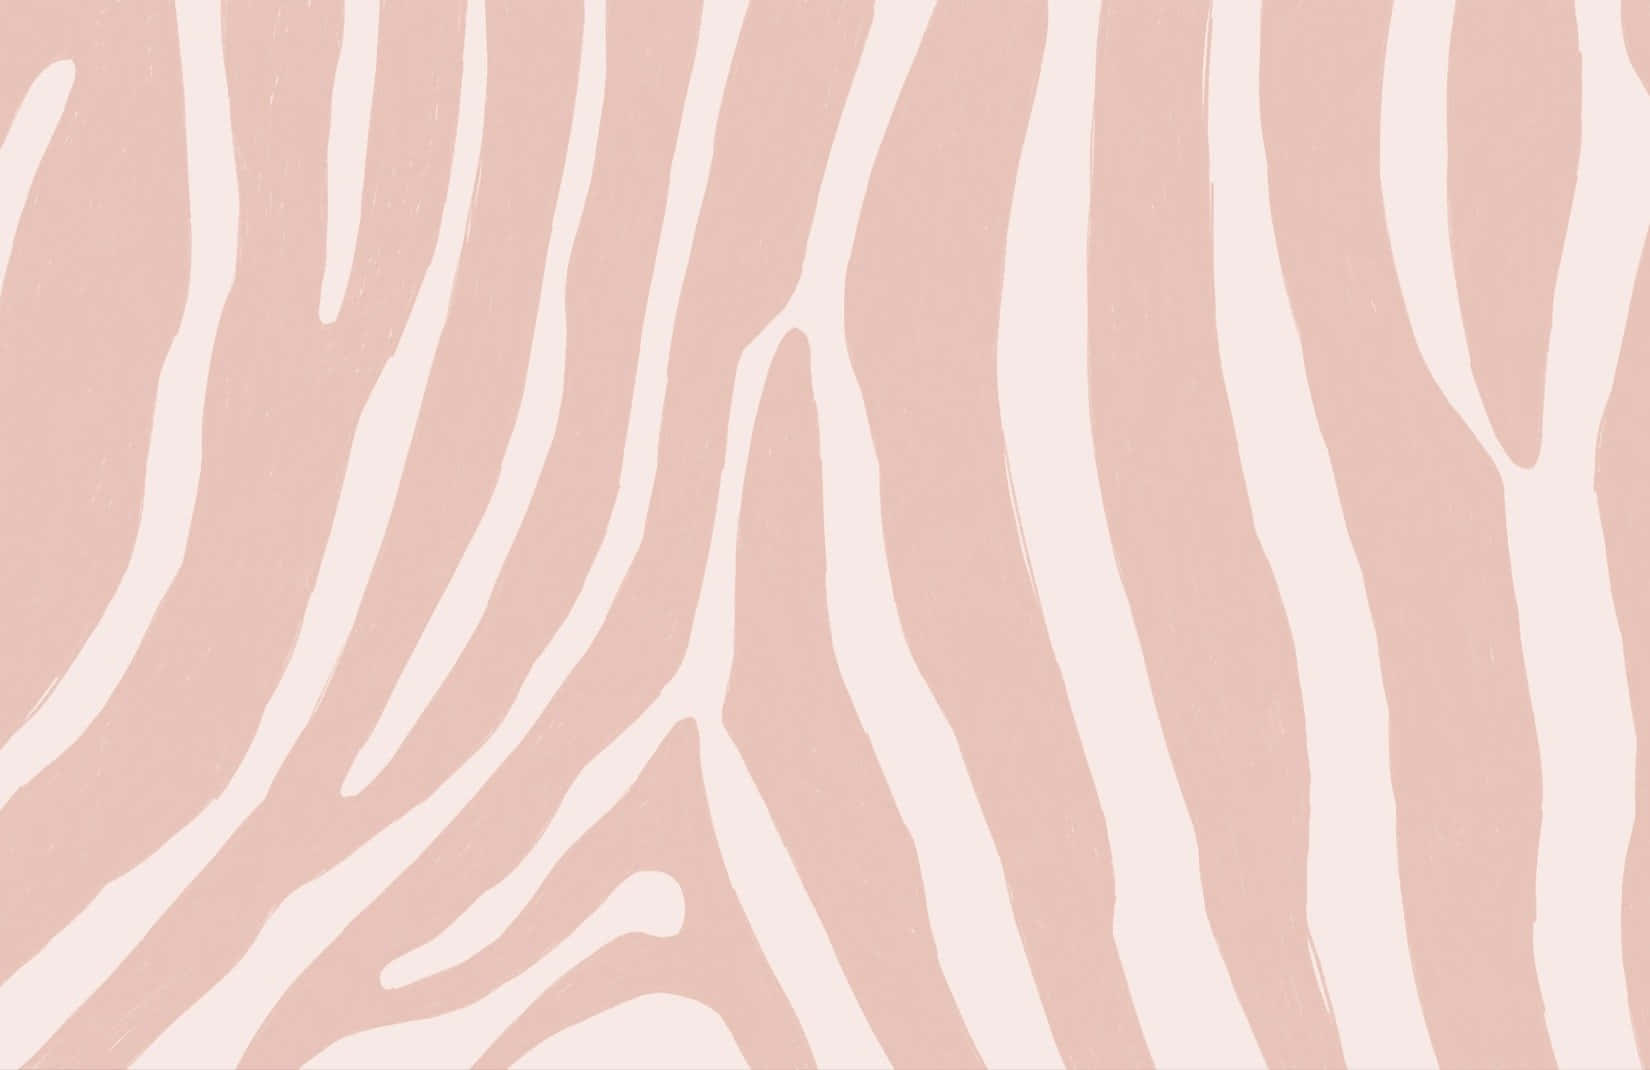 Sweet Dreams of Pink Zebra Stripes Wallpaper